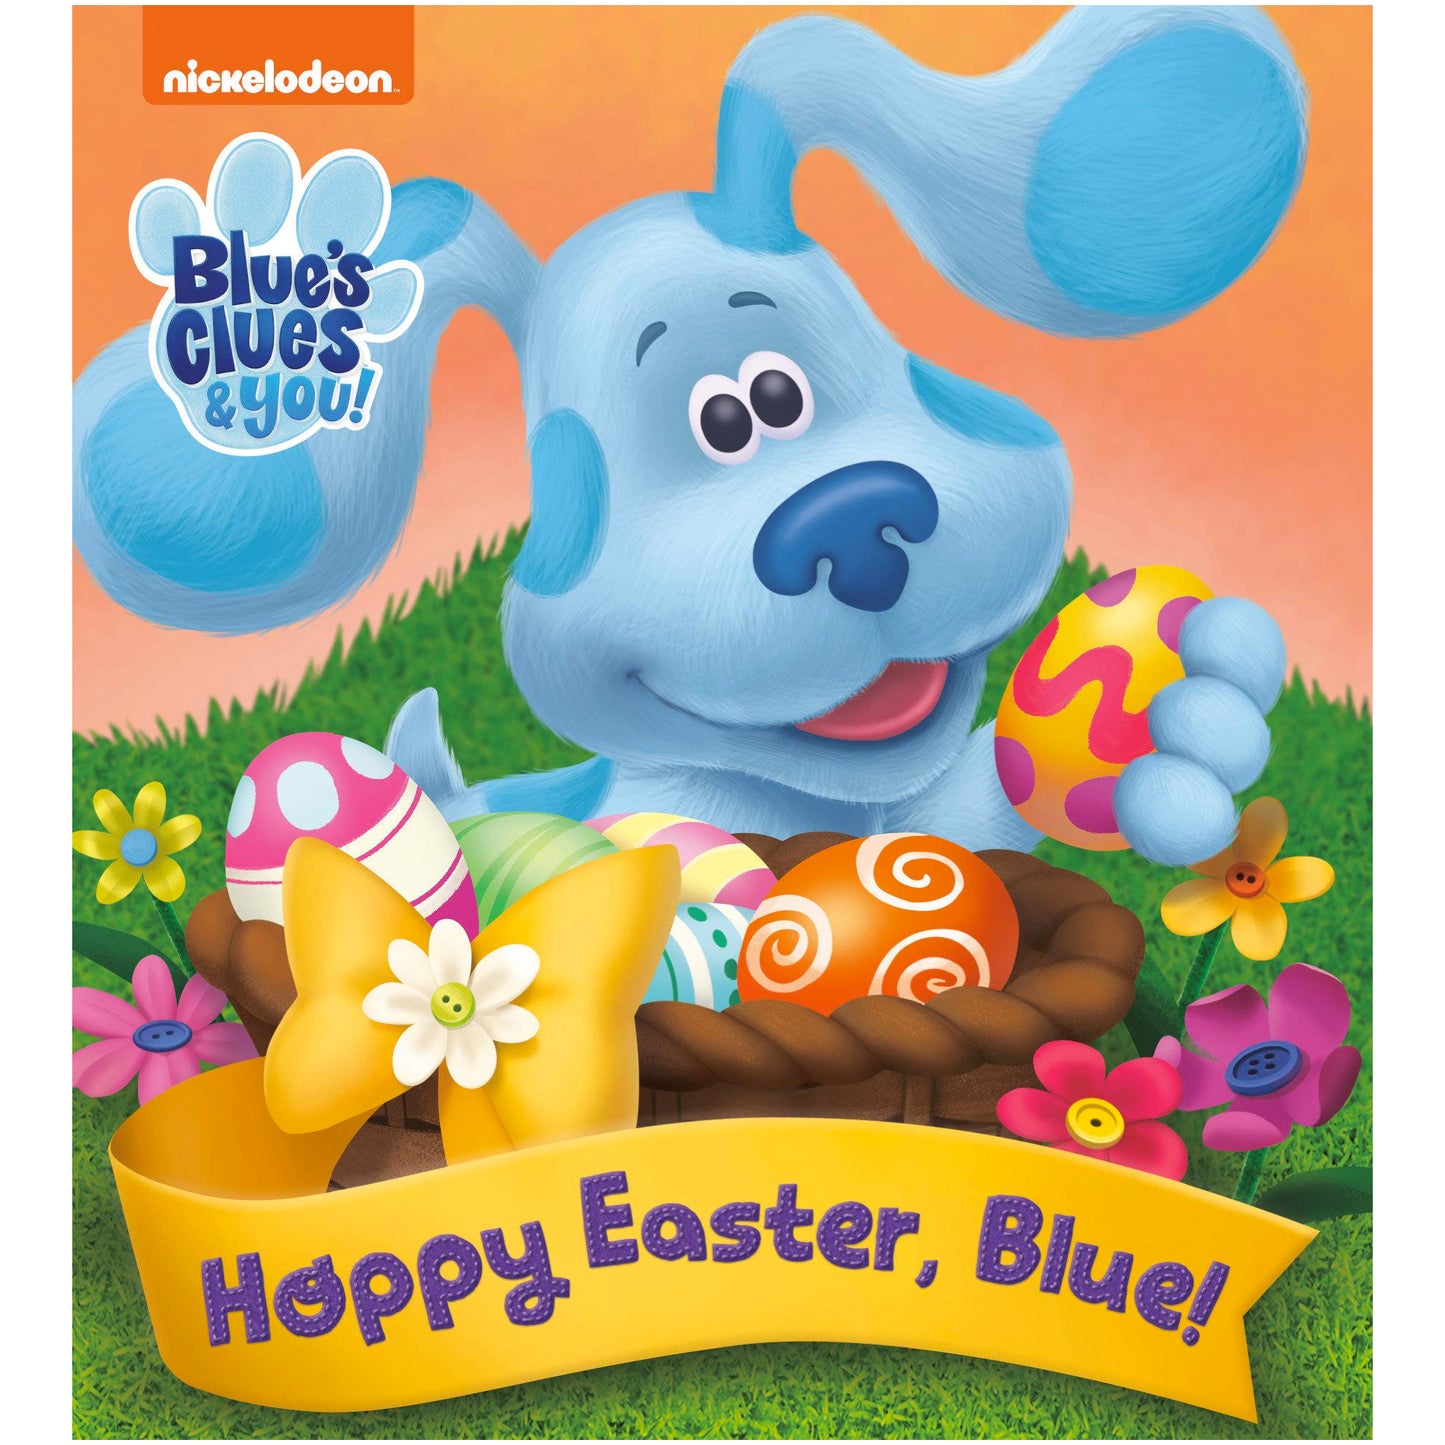 Hoppy Easter, Blue! (Blue's Clues & You) Board Book